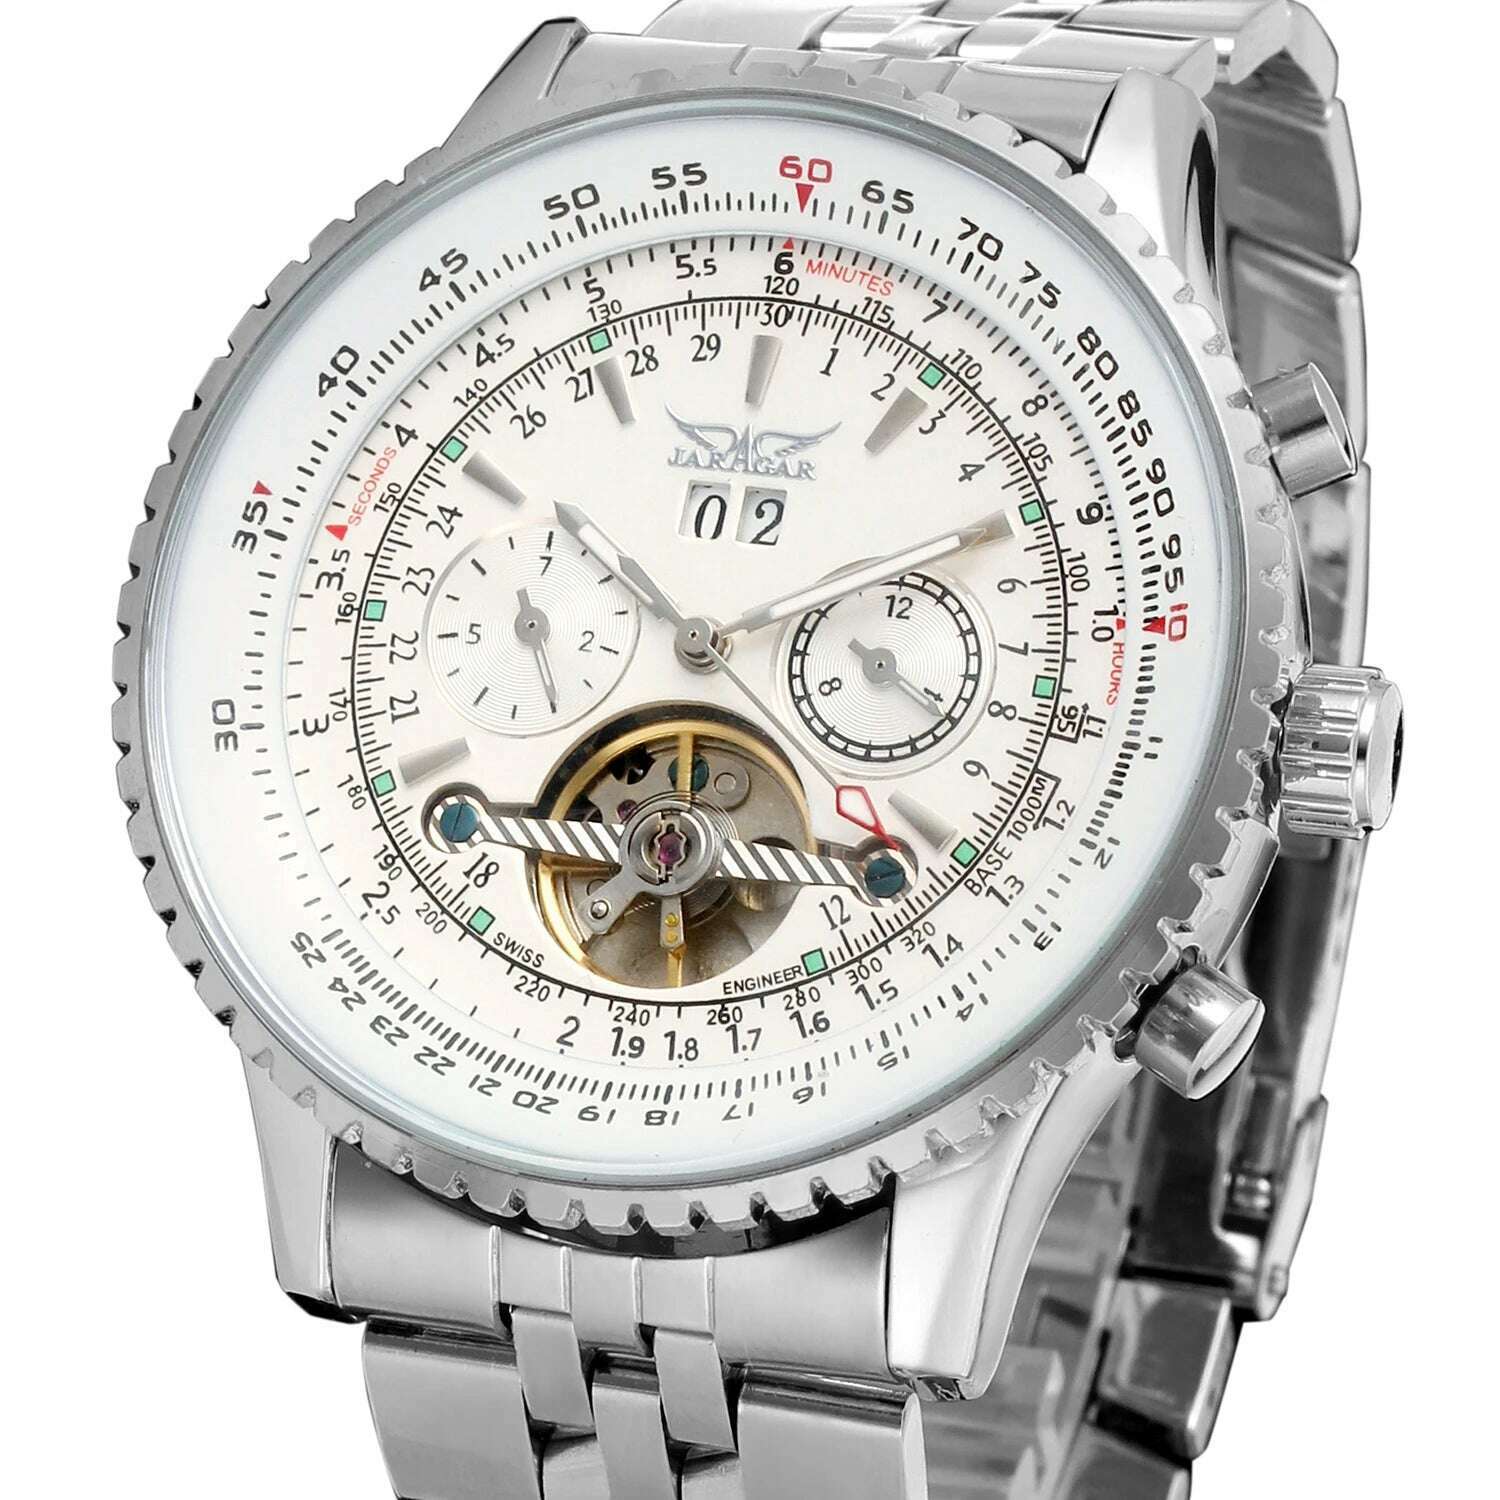 KIMLUD, 2019 Jaragar Top Brand Mens Watches Luxury Men Military Sport Wristwatch Automatic Mechanical Tourbillon Clock Relogio Masculino, KIMLUD Women's Clothes